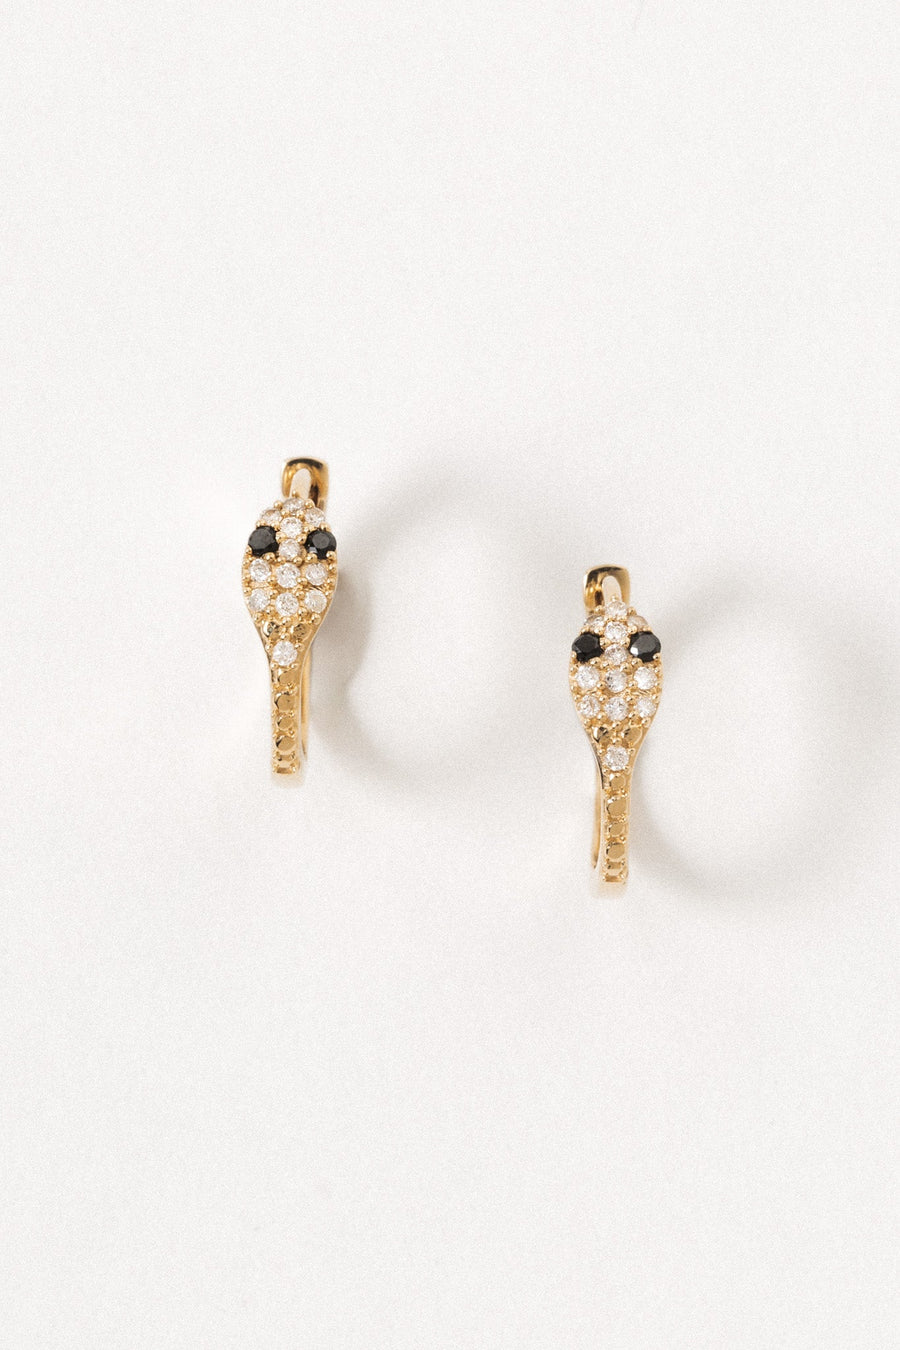 LA KAISER Jewelry Gold / Diamond 14kt Python Diamond Hoop Earrings